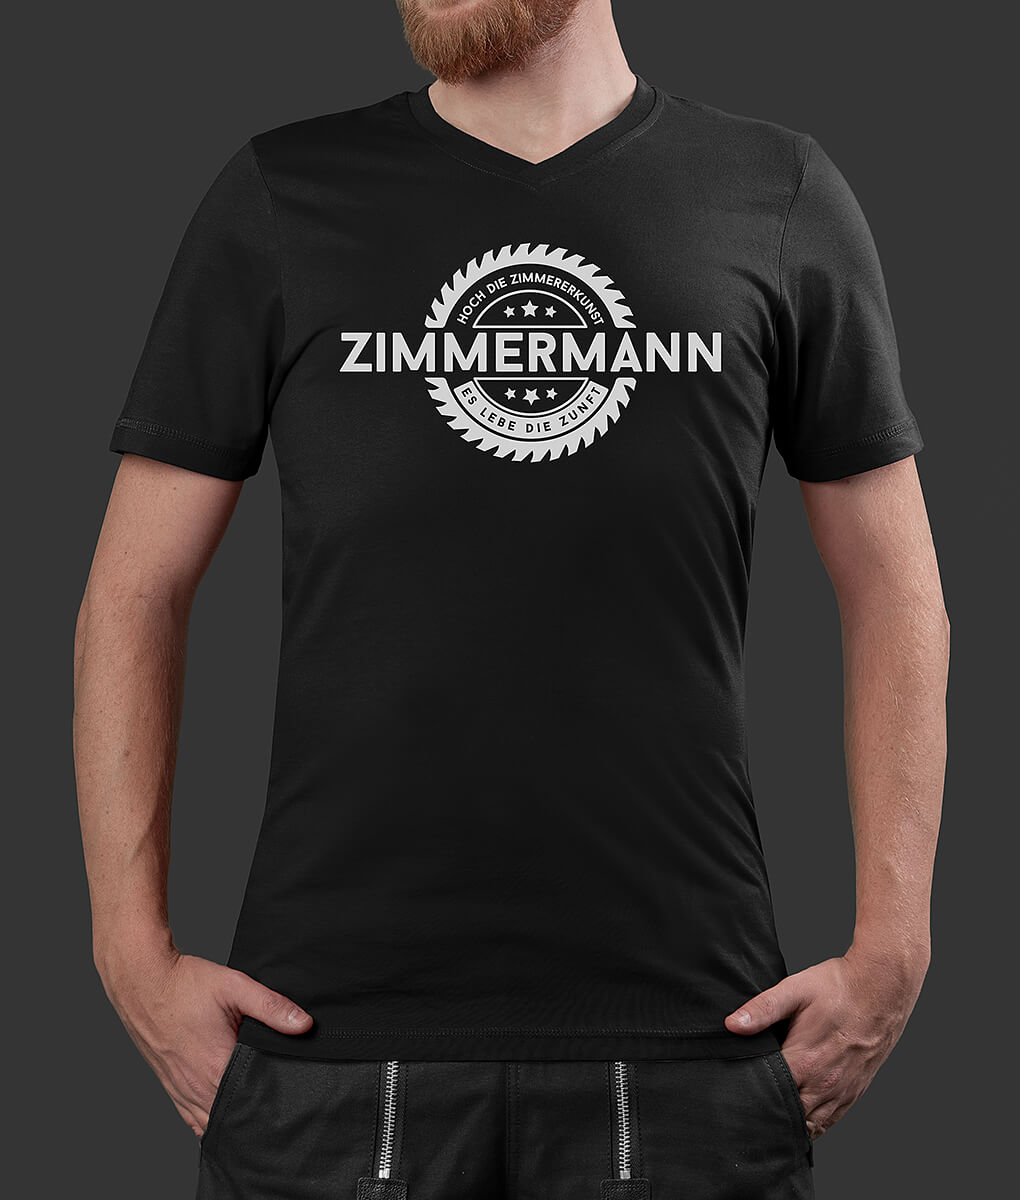 T-Shirt Philipp Zimmermann Sge Brust